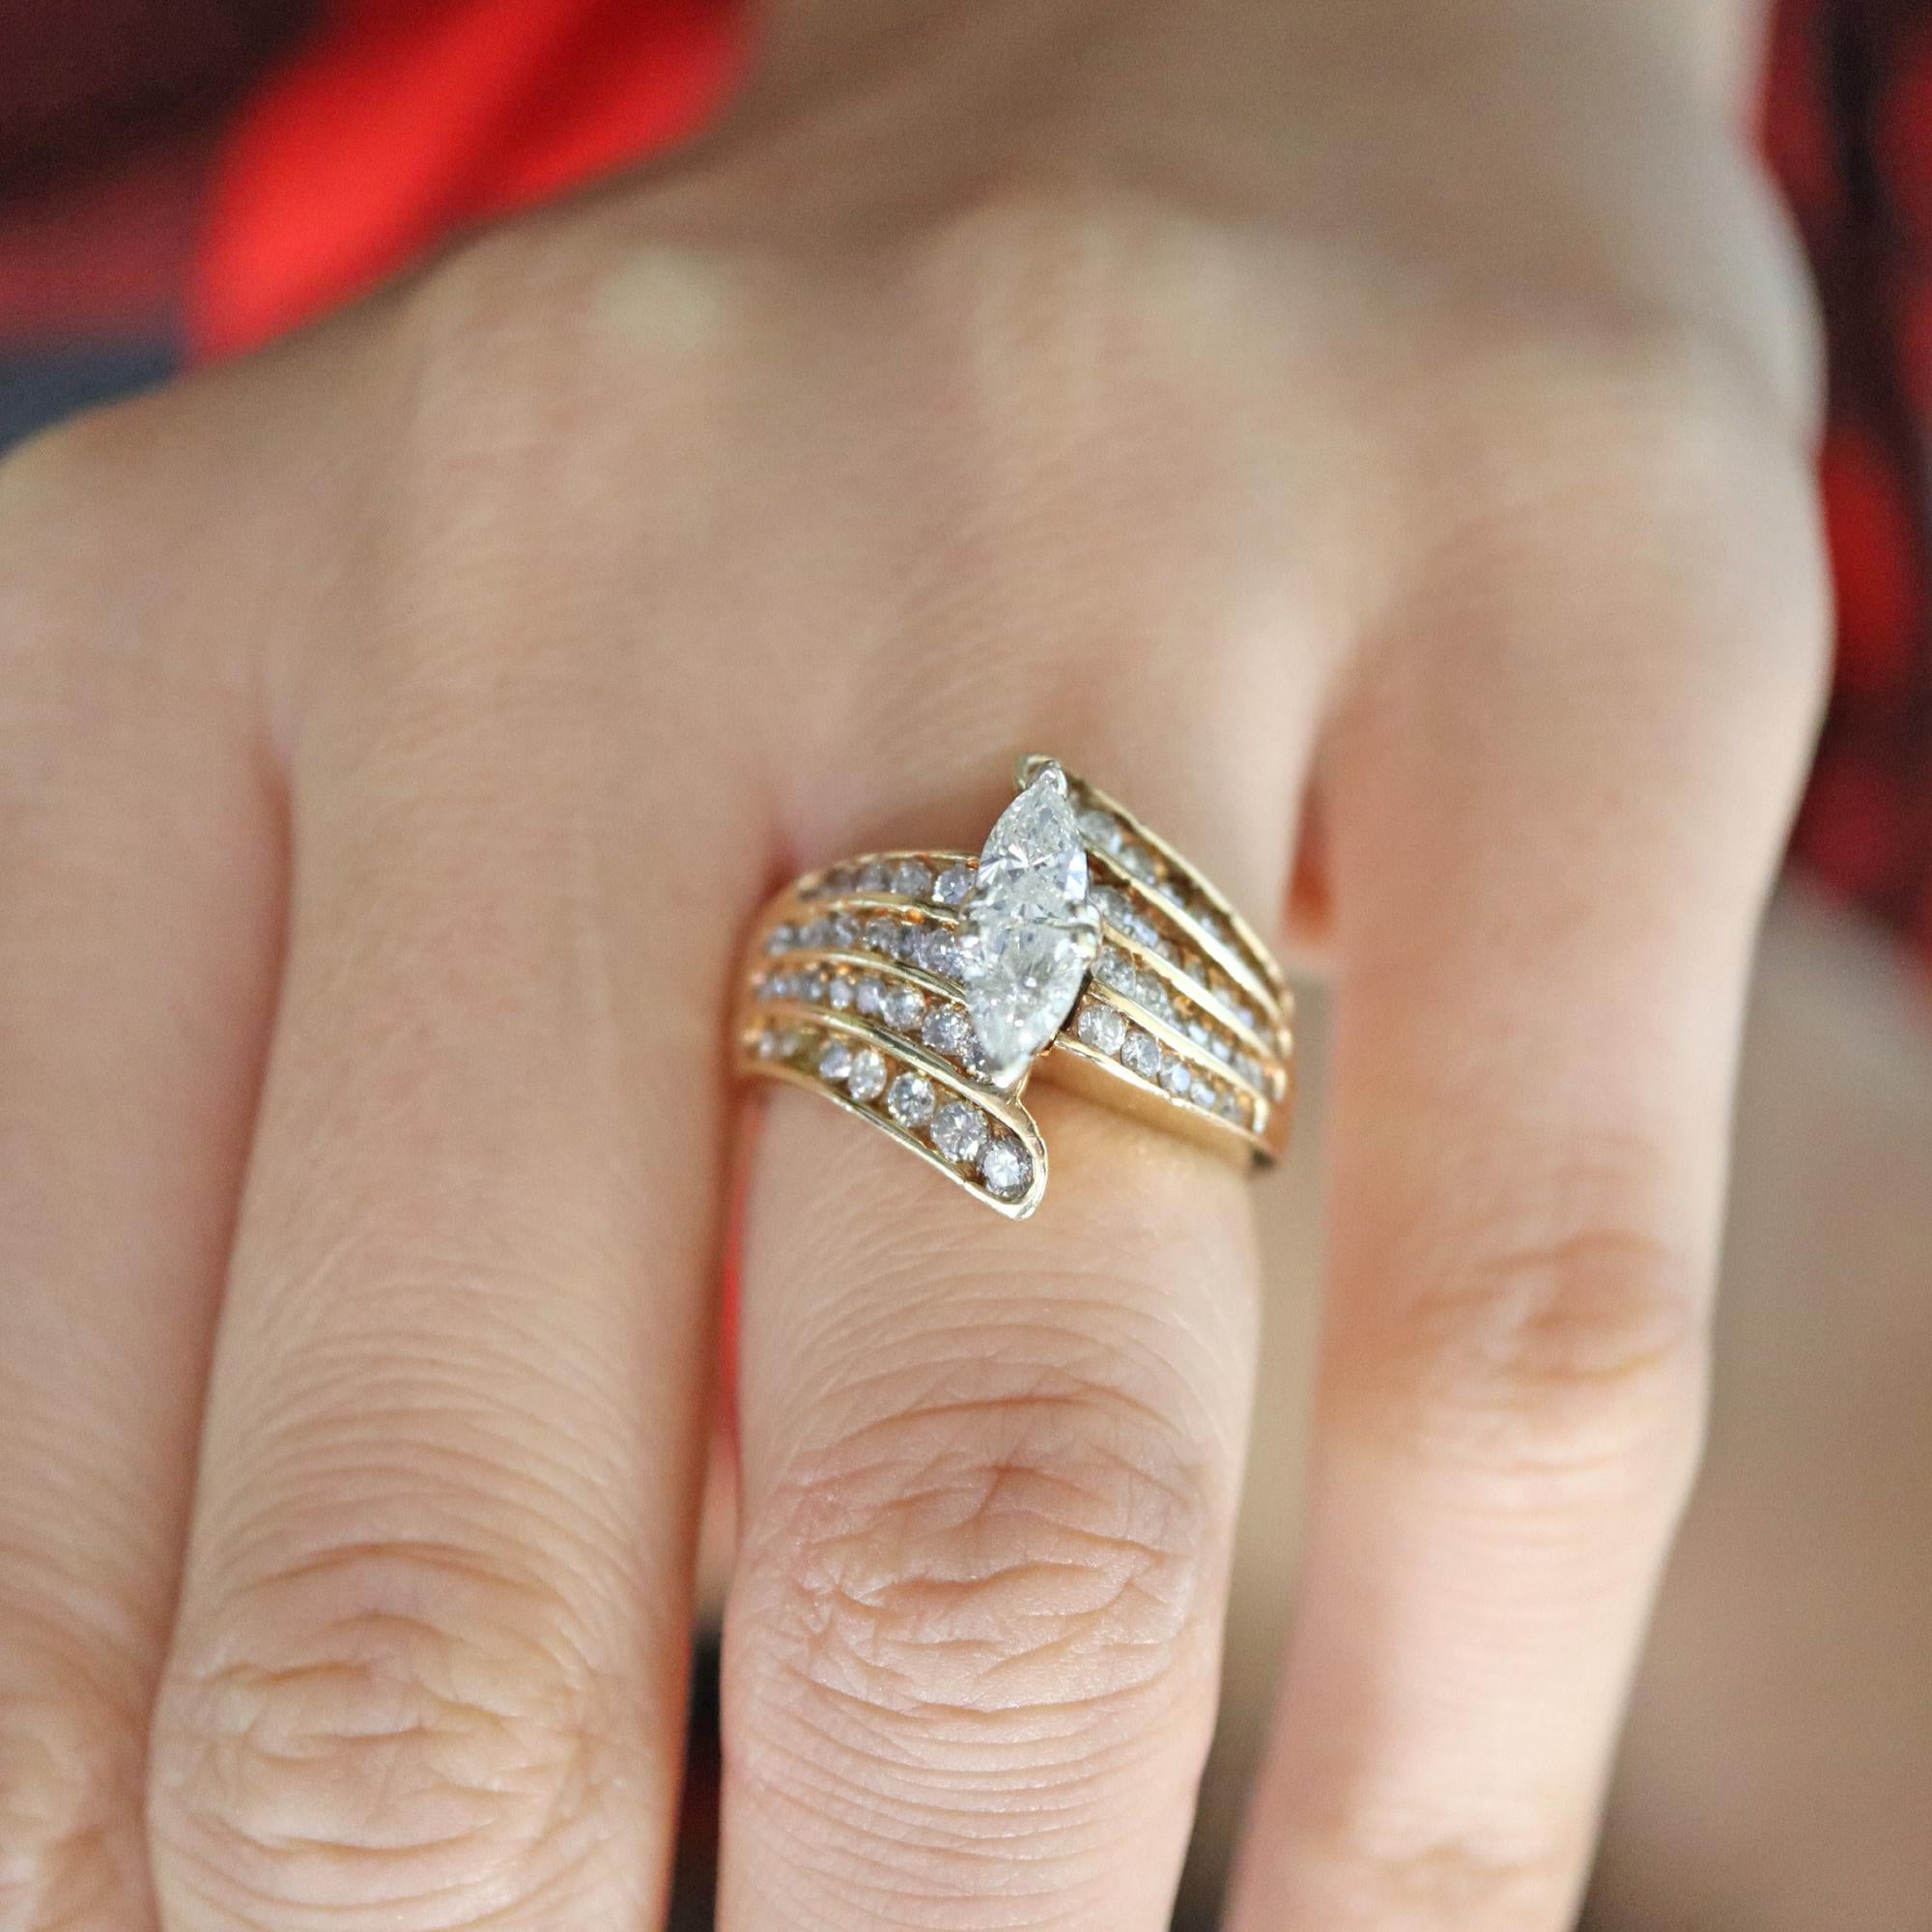 Rachel Koen Marquise Illusion Diamond Engagement Ring 14K Gold 1.75 Cttw SZ 6.75 For Sale 1